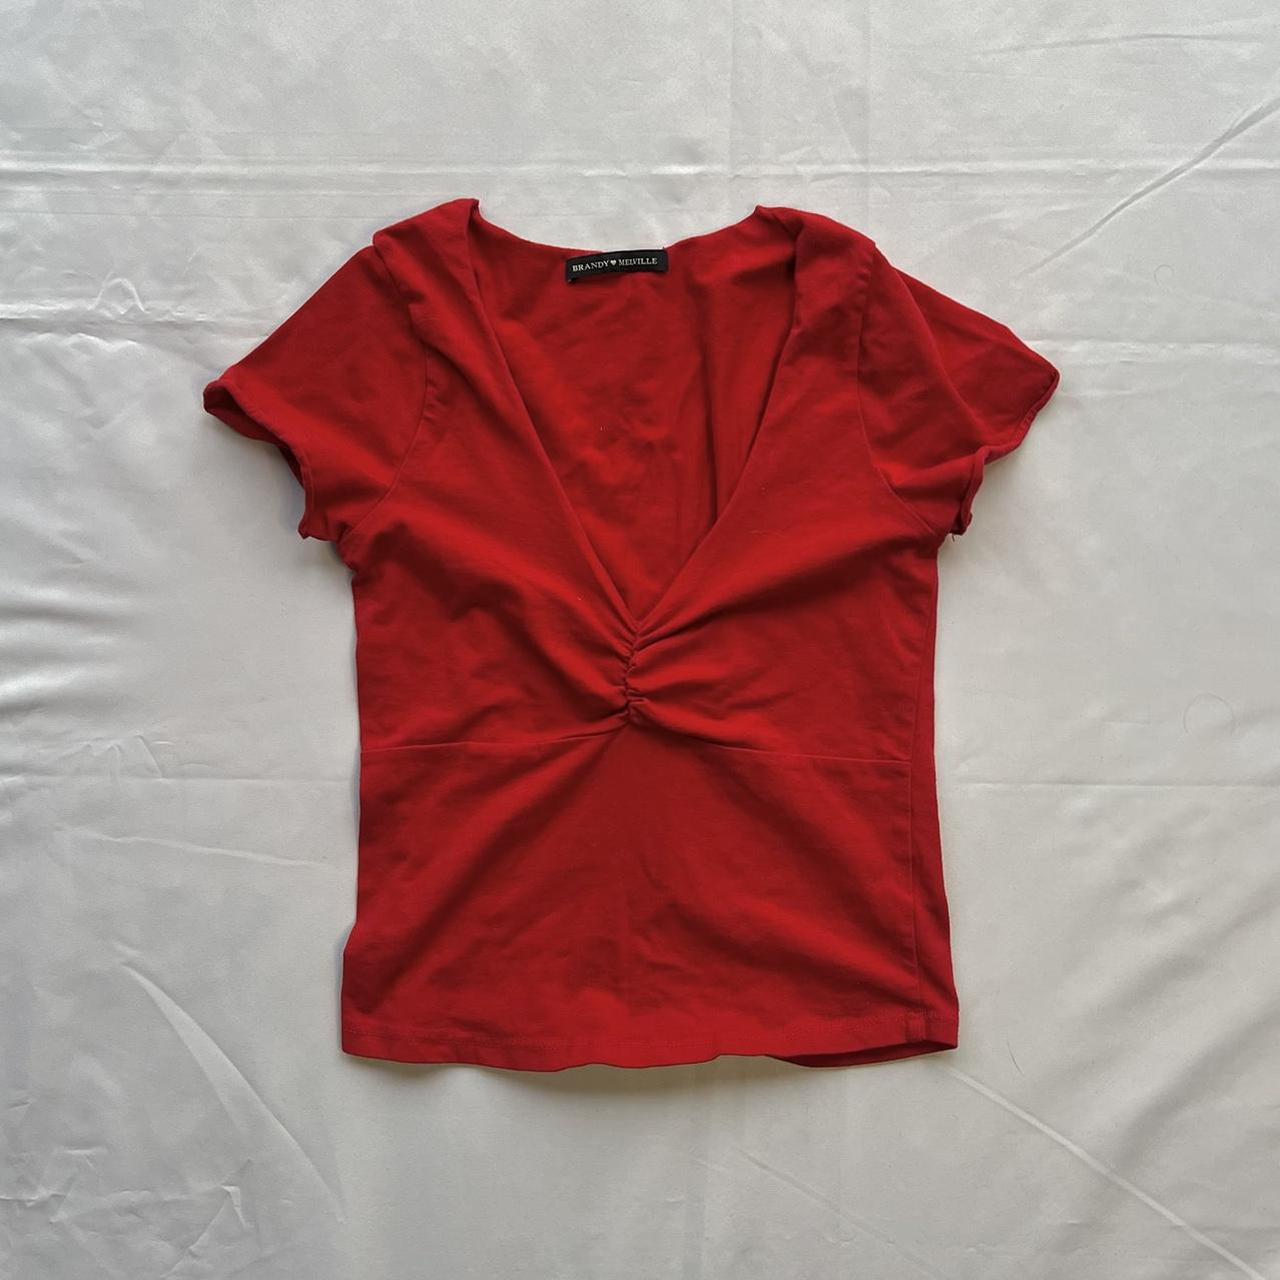 Brandy Melville Women's Red Crop Top ❓ ABOUT THE - Depop